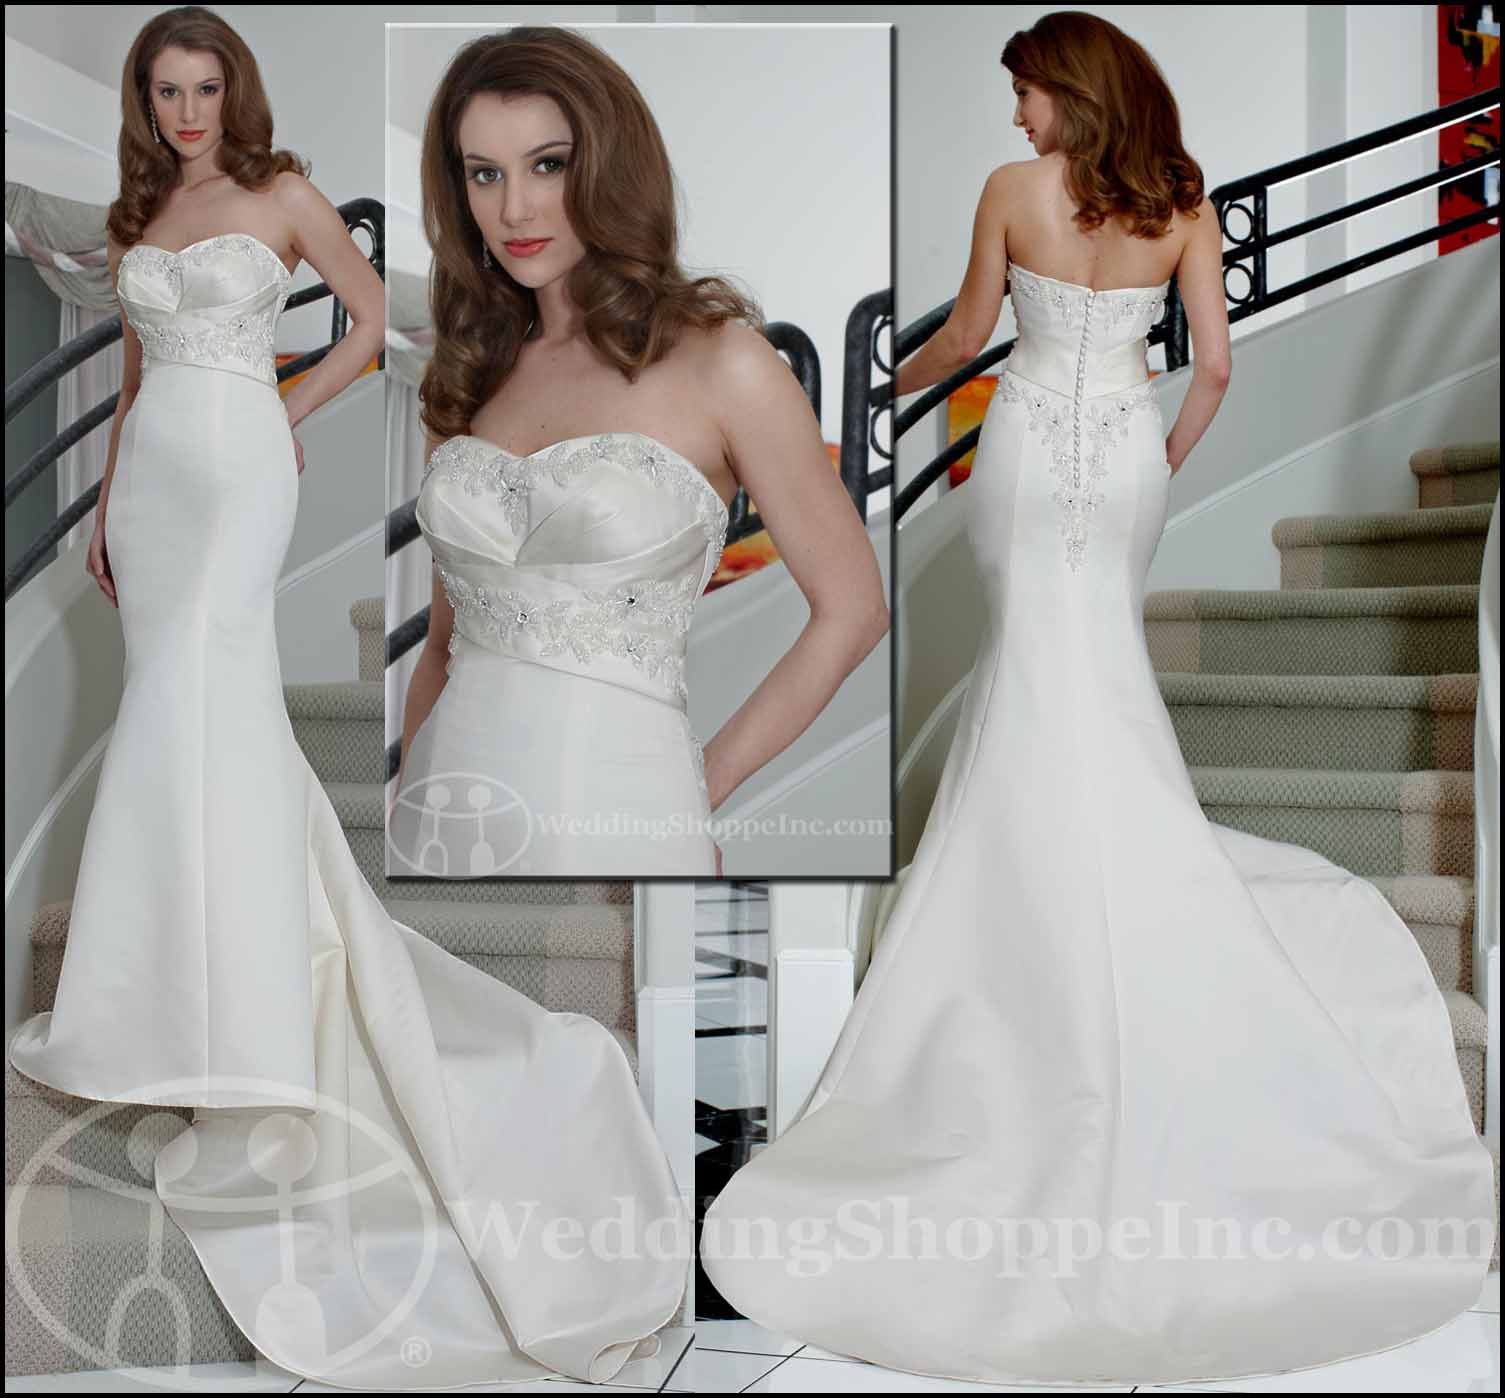 Da Vinci Bridal Wedding Dresses: Affordable Bridal Gowns - Fast ...